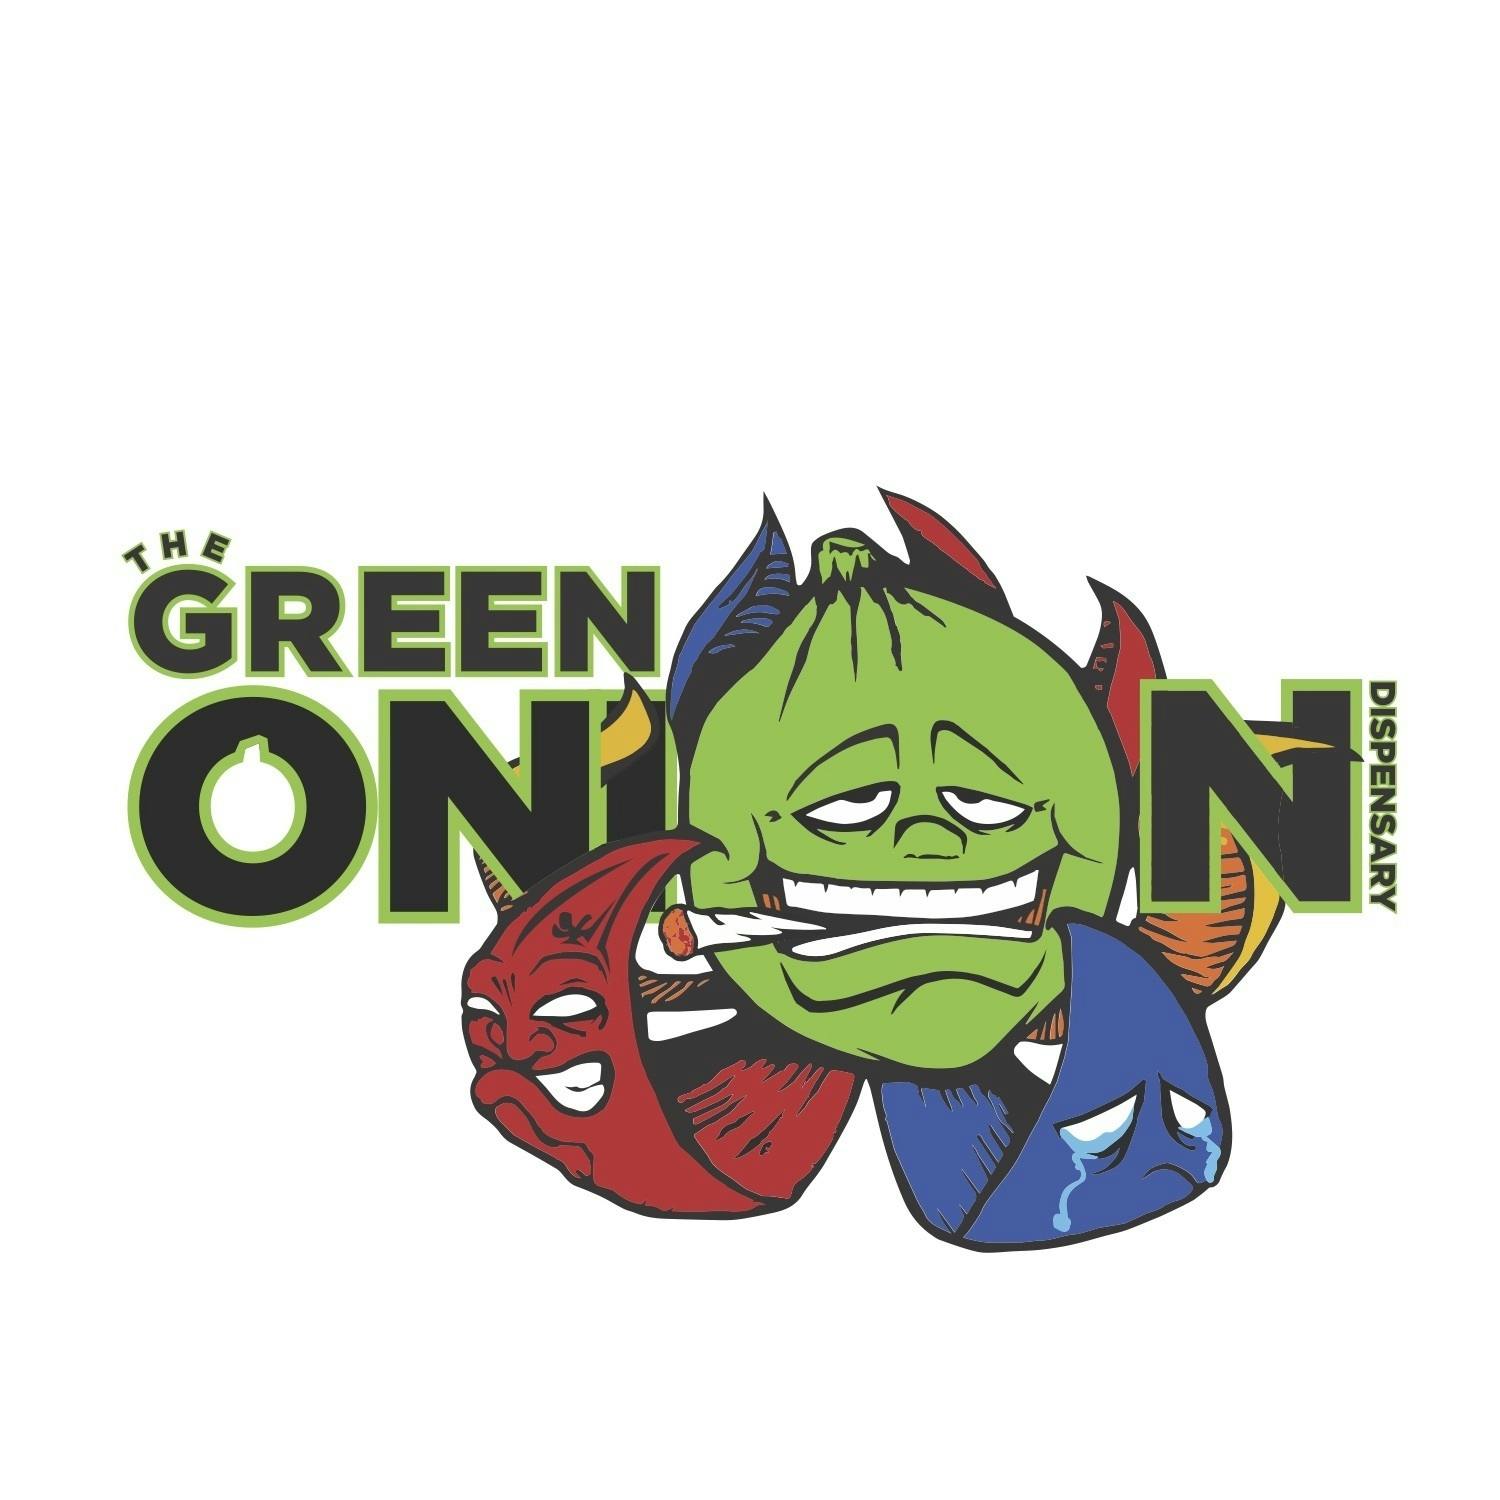 The Green Onion logo